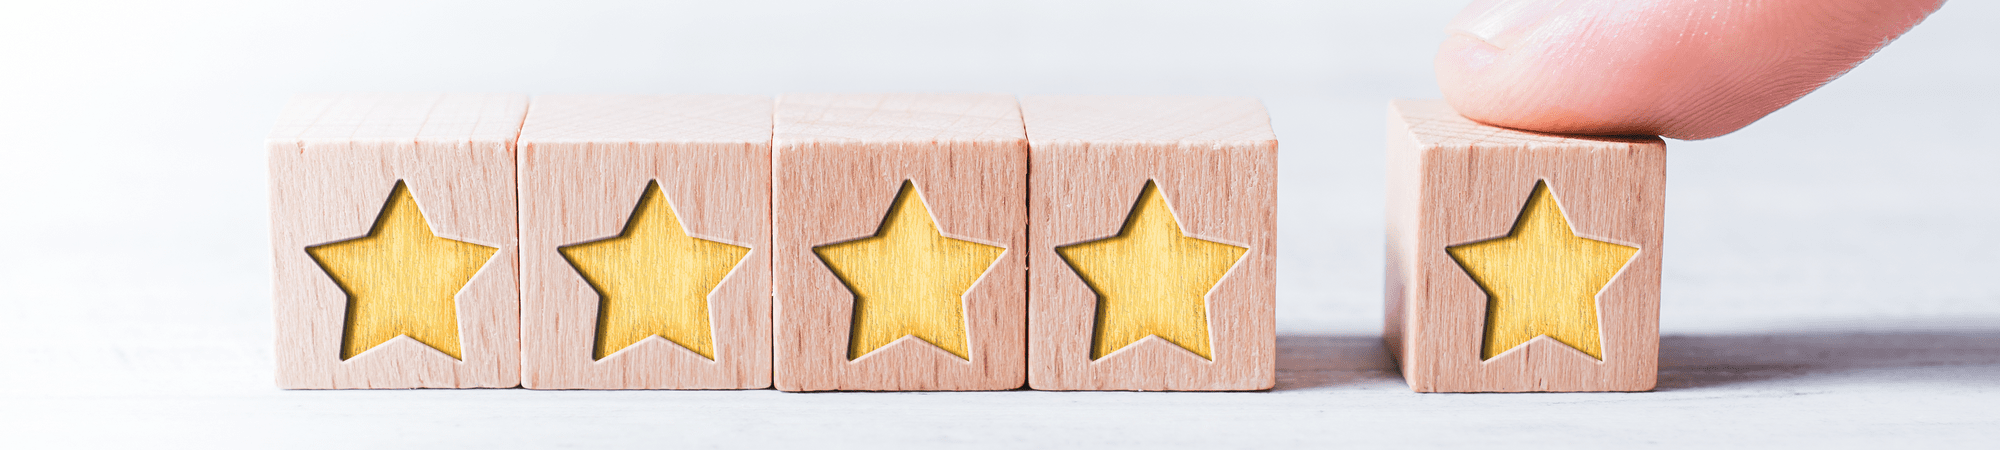 5 stars made on wooden blocks